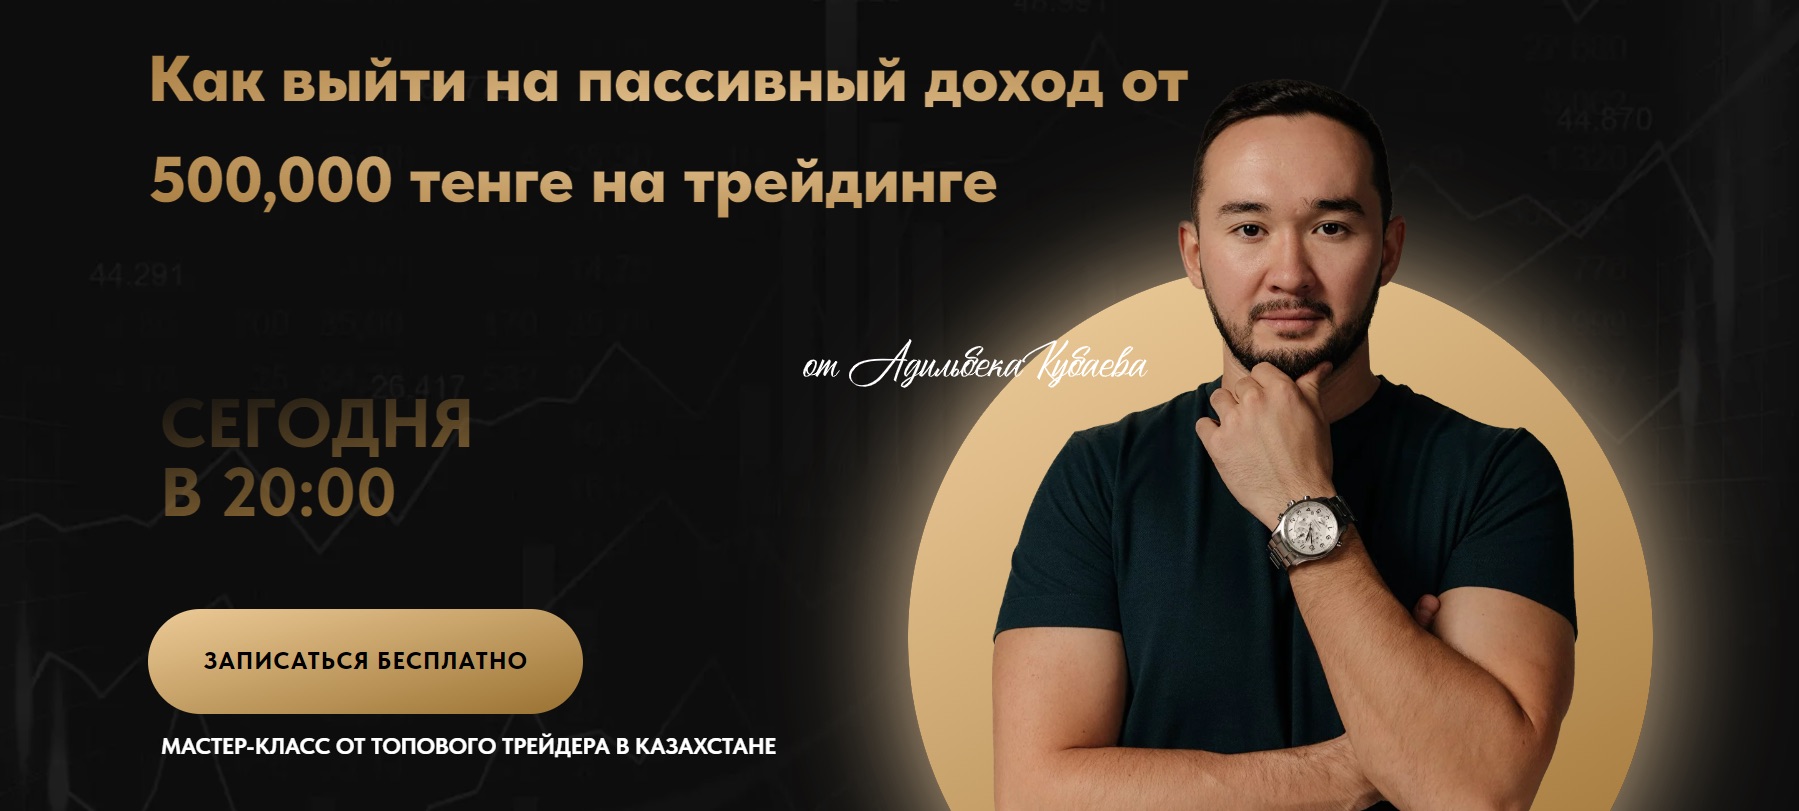 Адильбек Кубаев - сайт